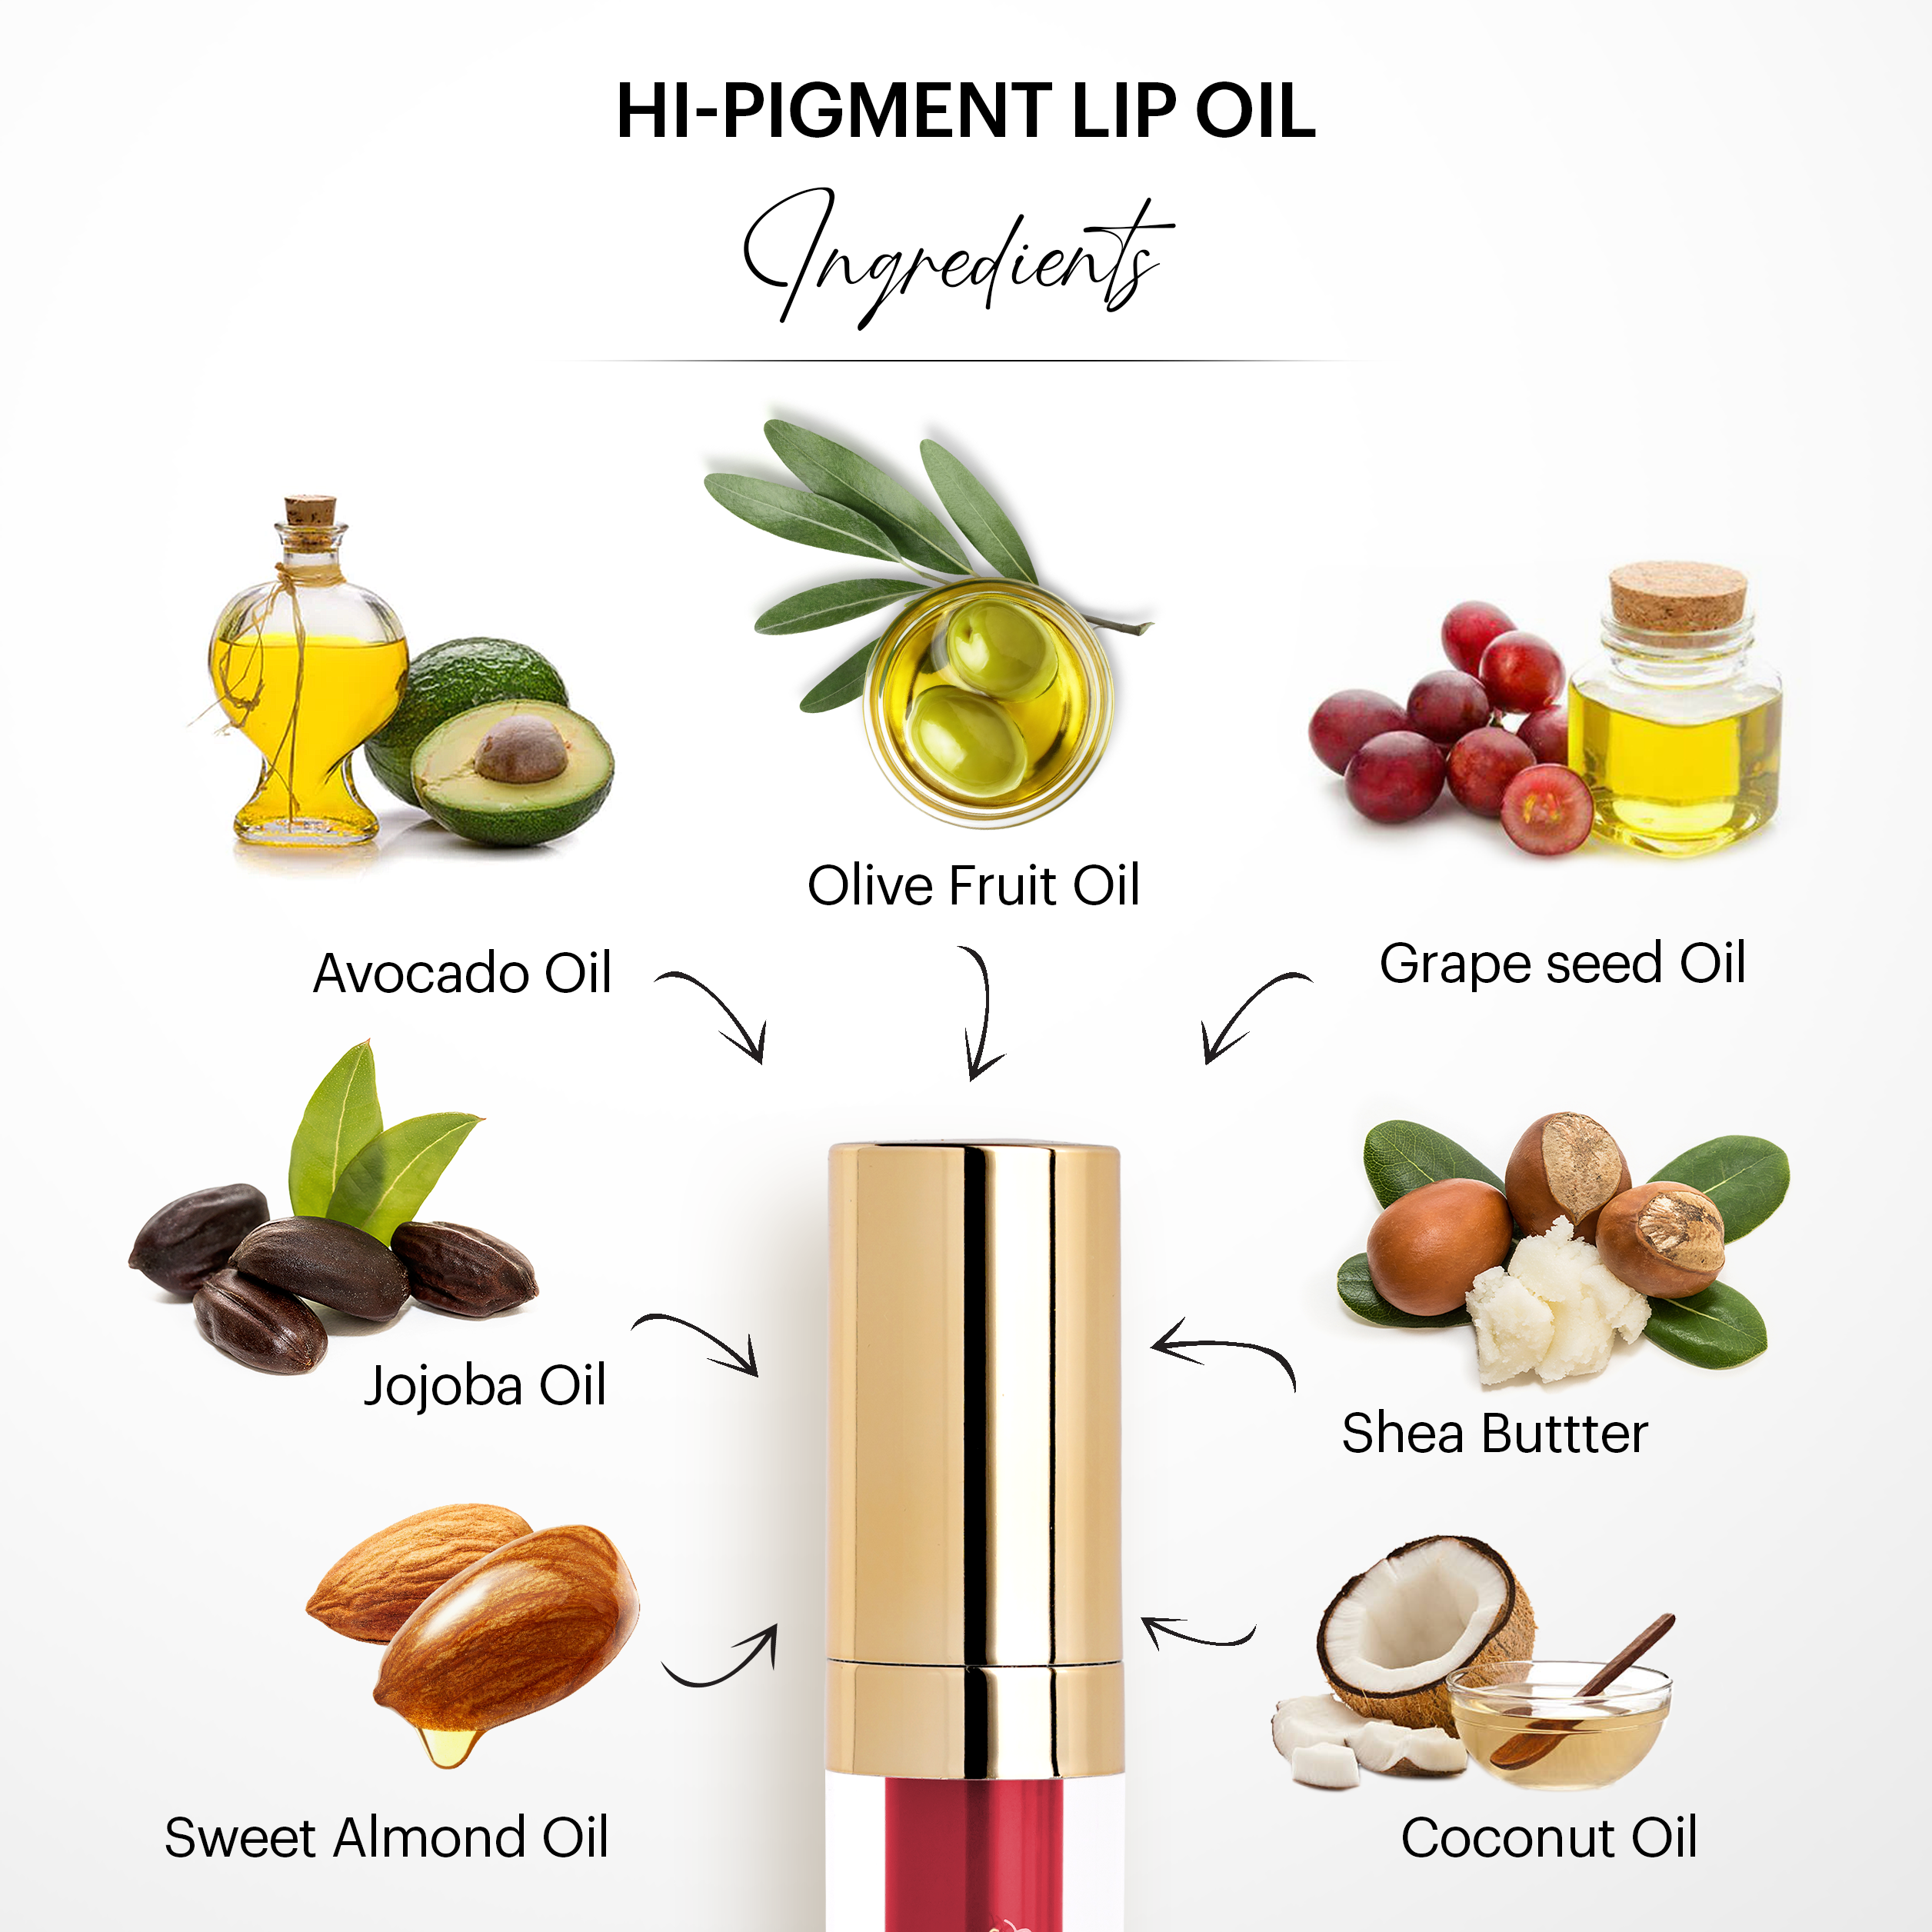 Hi-Pigment Lip Oil: Darling 02